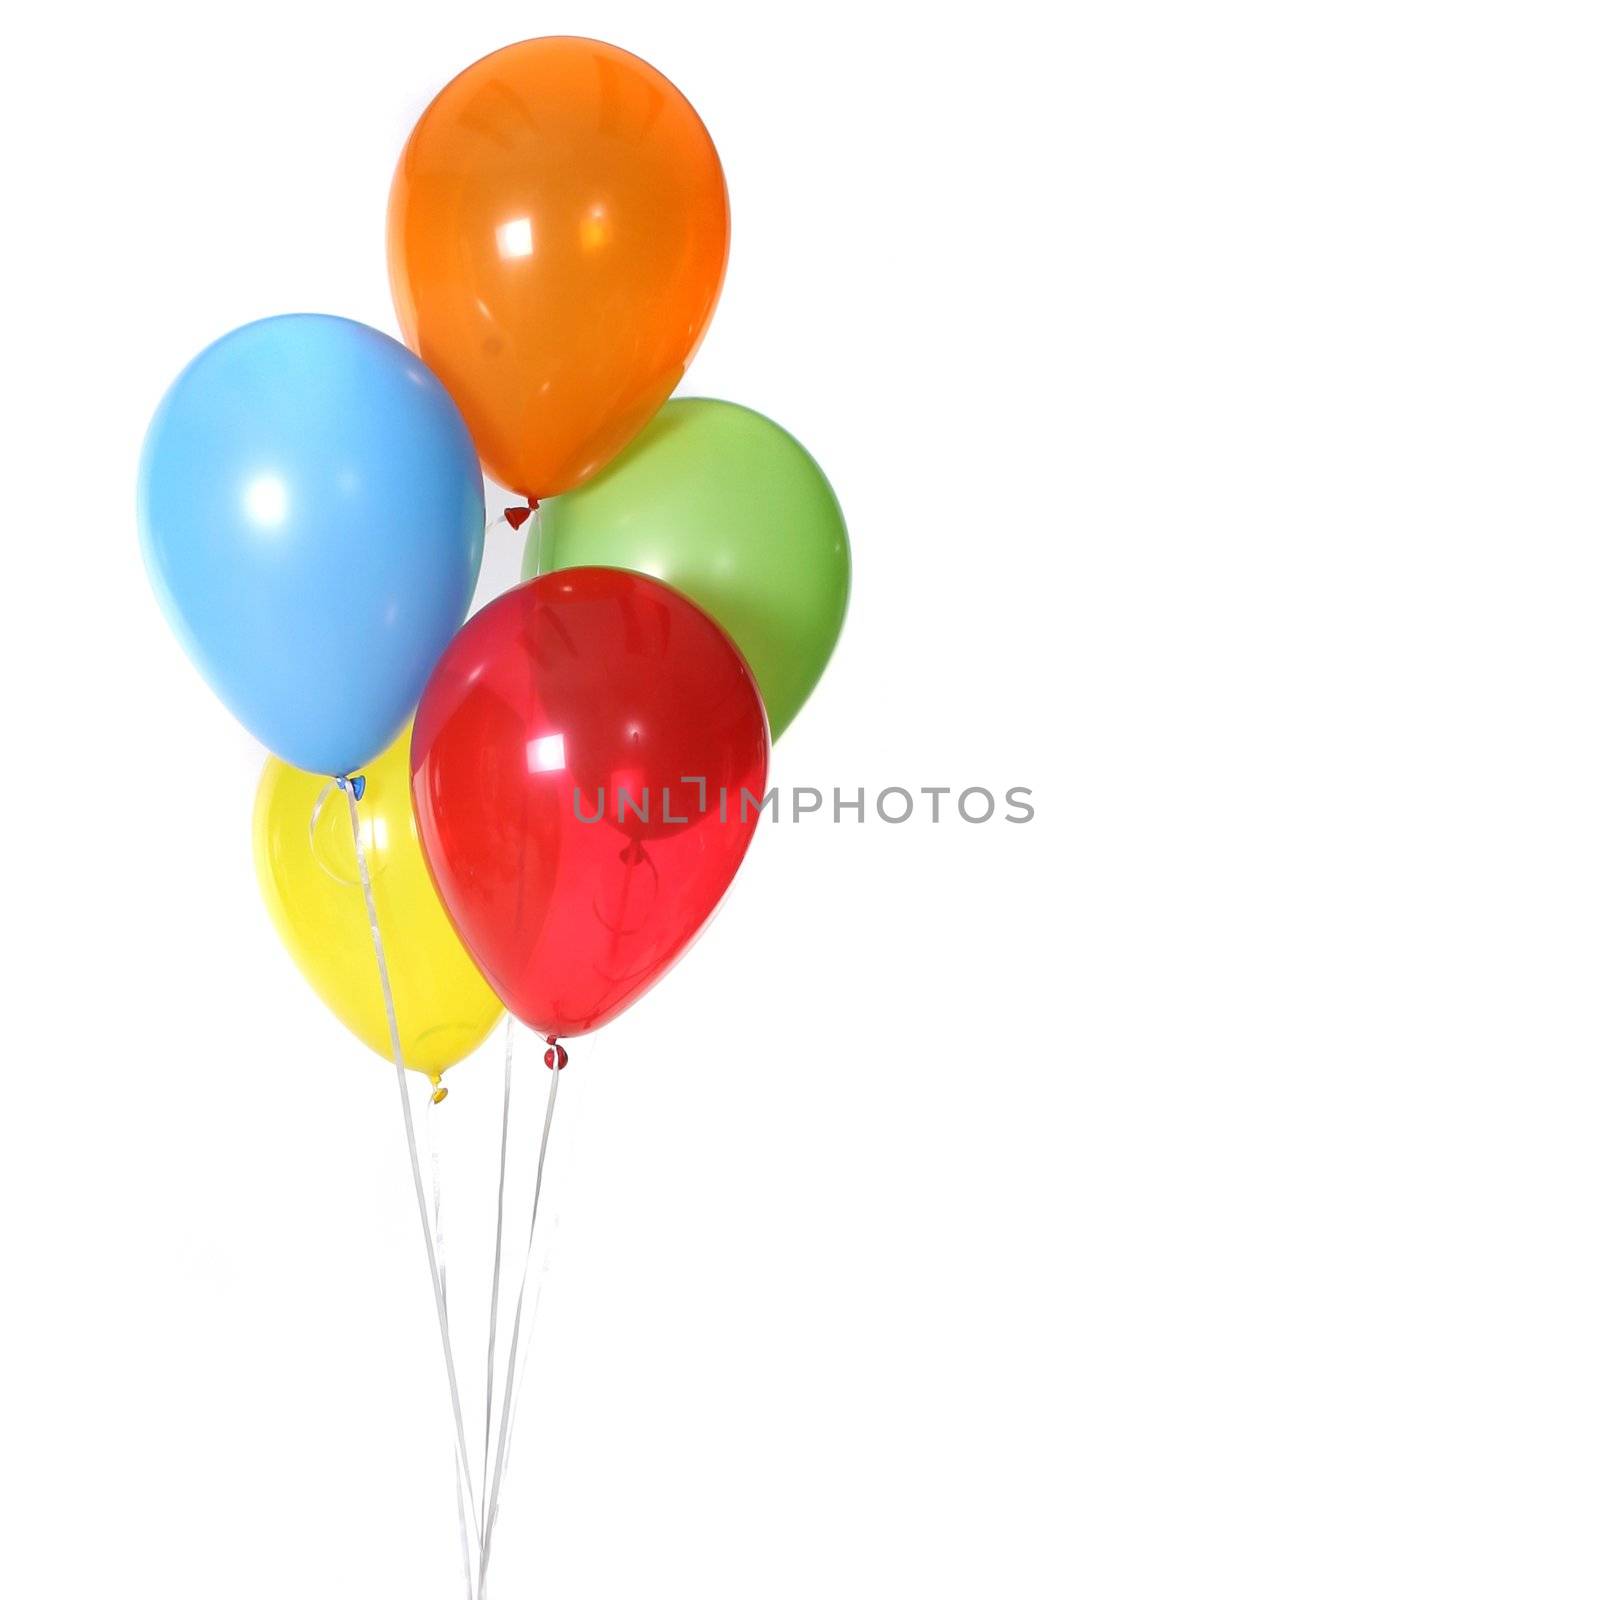 5 Birthday Celebration Balloons Isolated on White Background